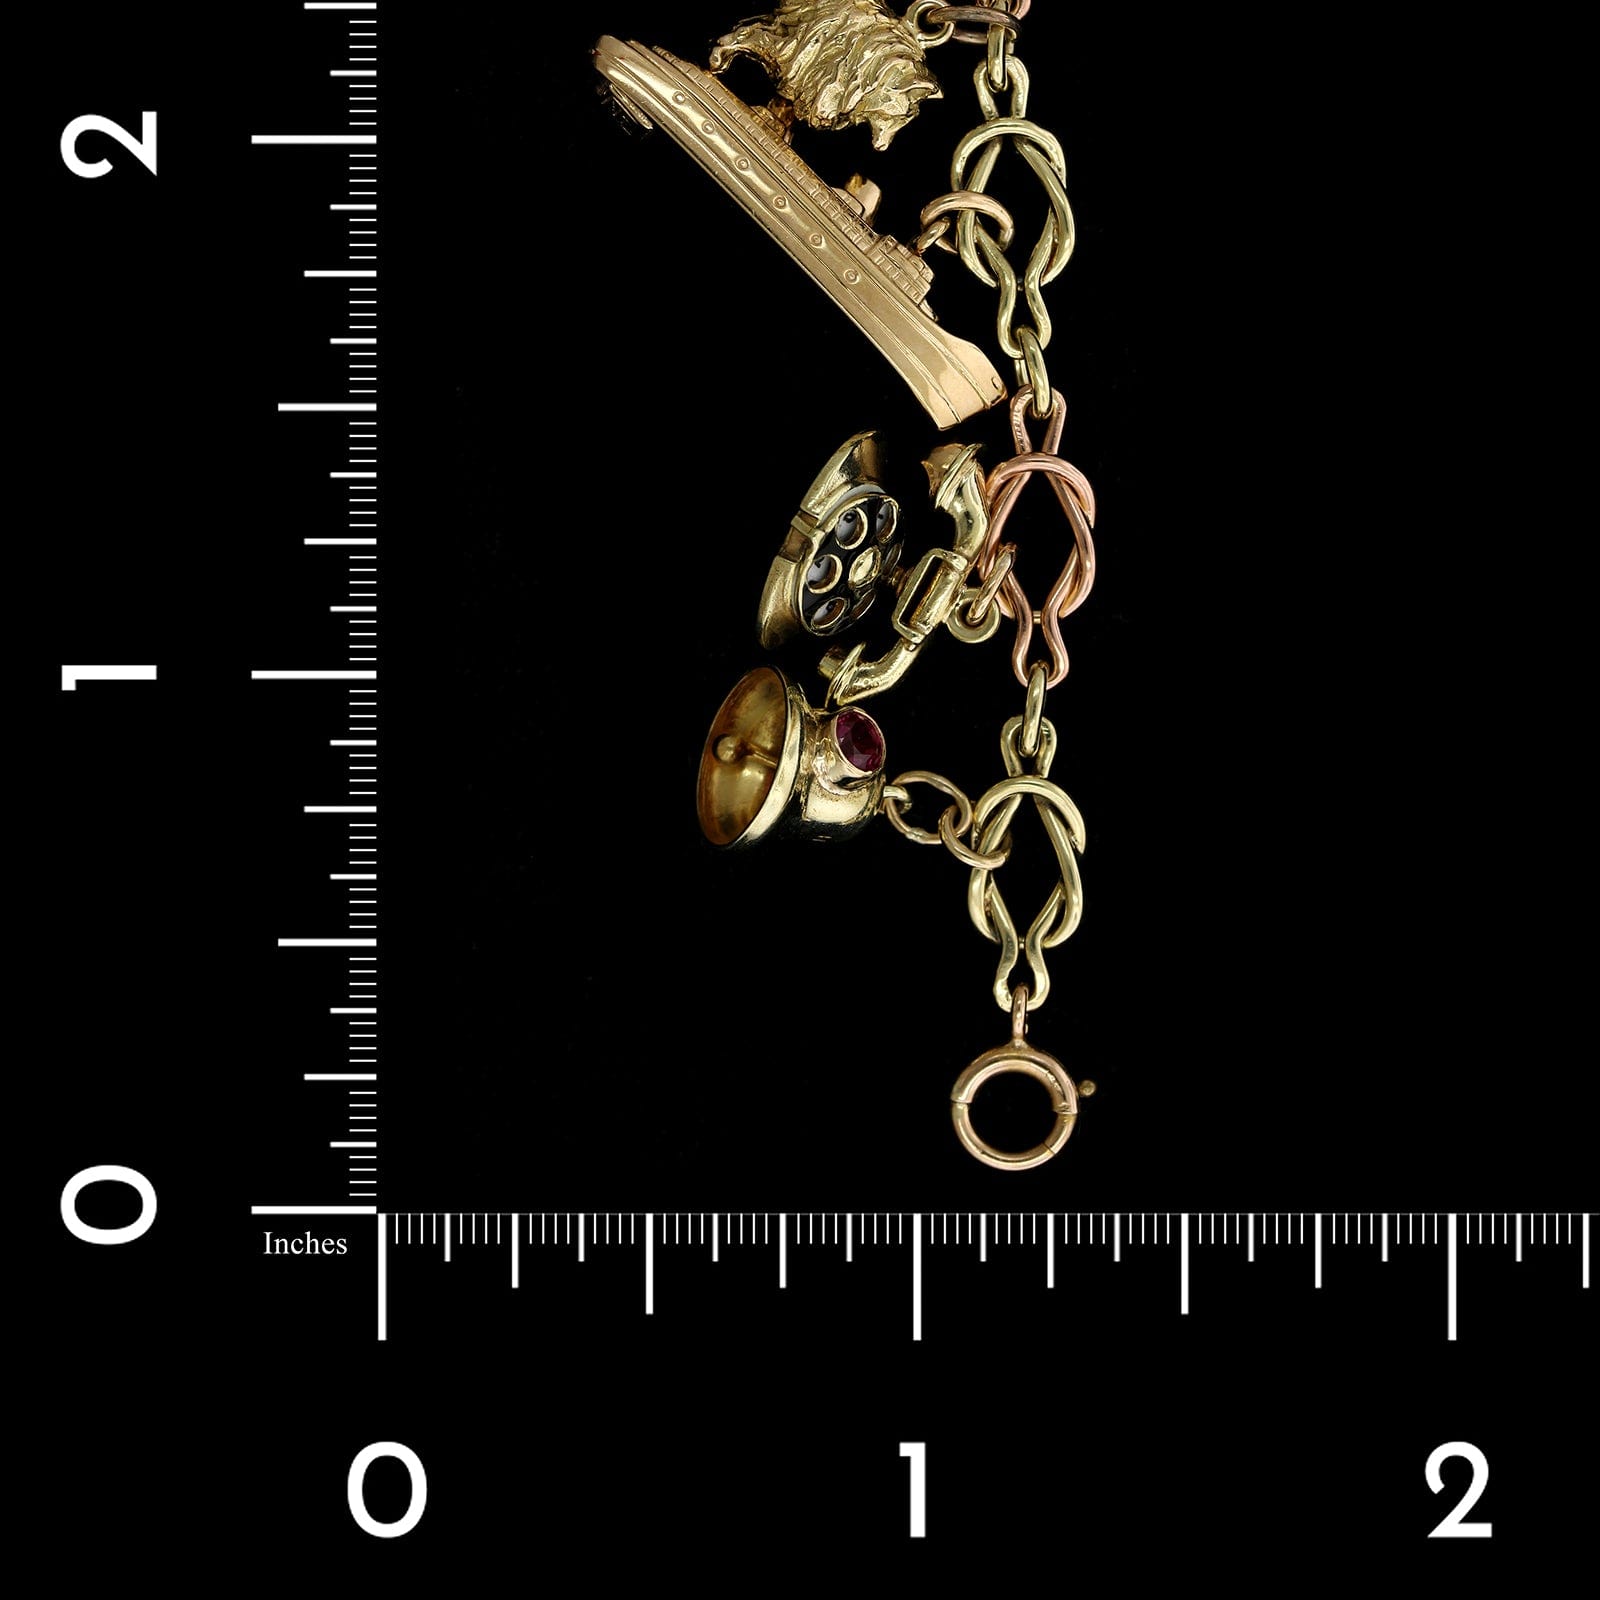 Vintage 14K Yellow Gold Estate Charm Bracelet